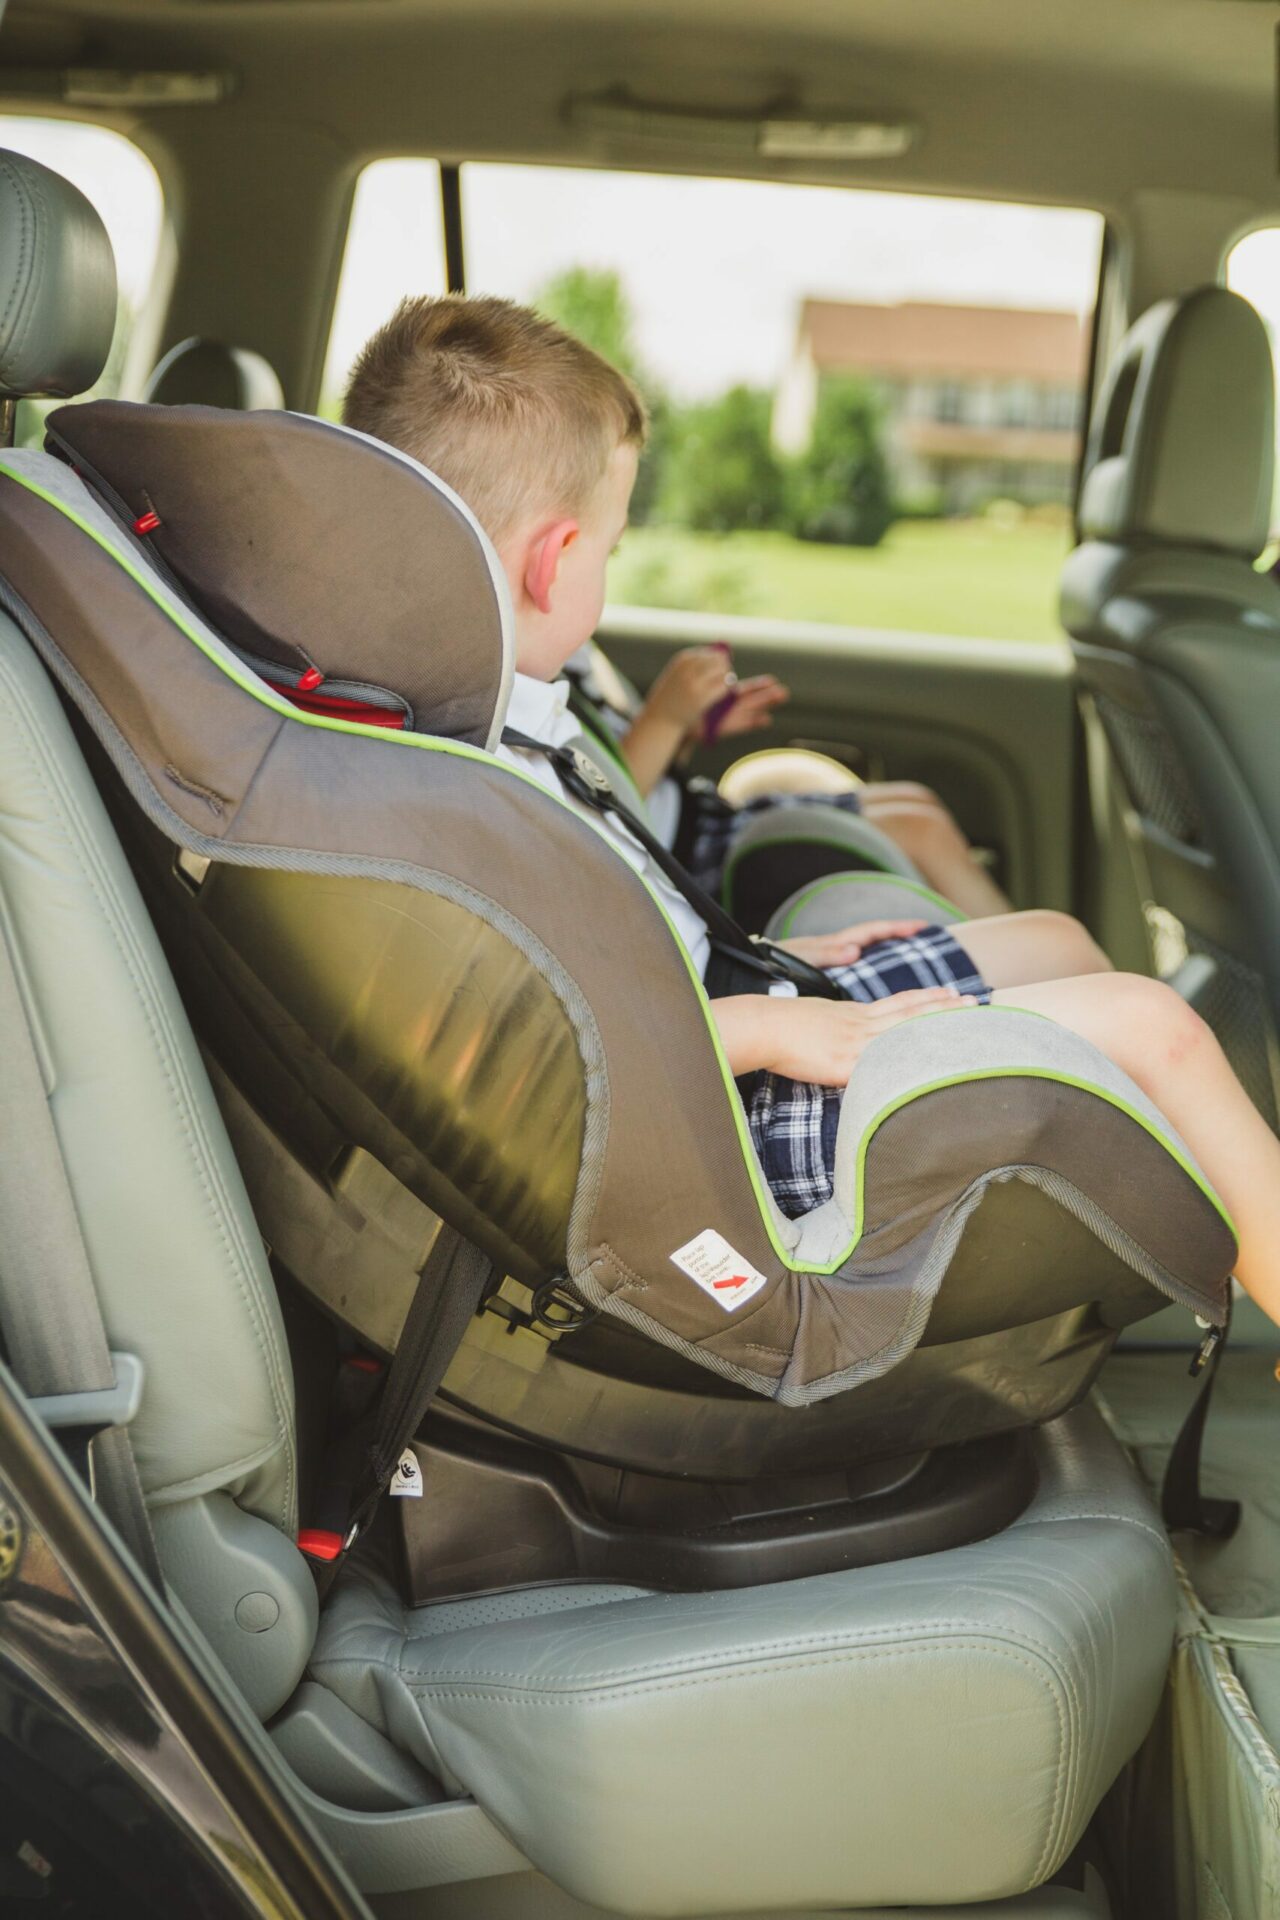 What Should Baby Wear In Car Seat In Winter